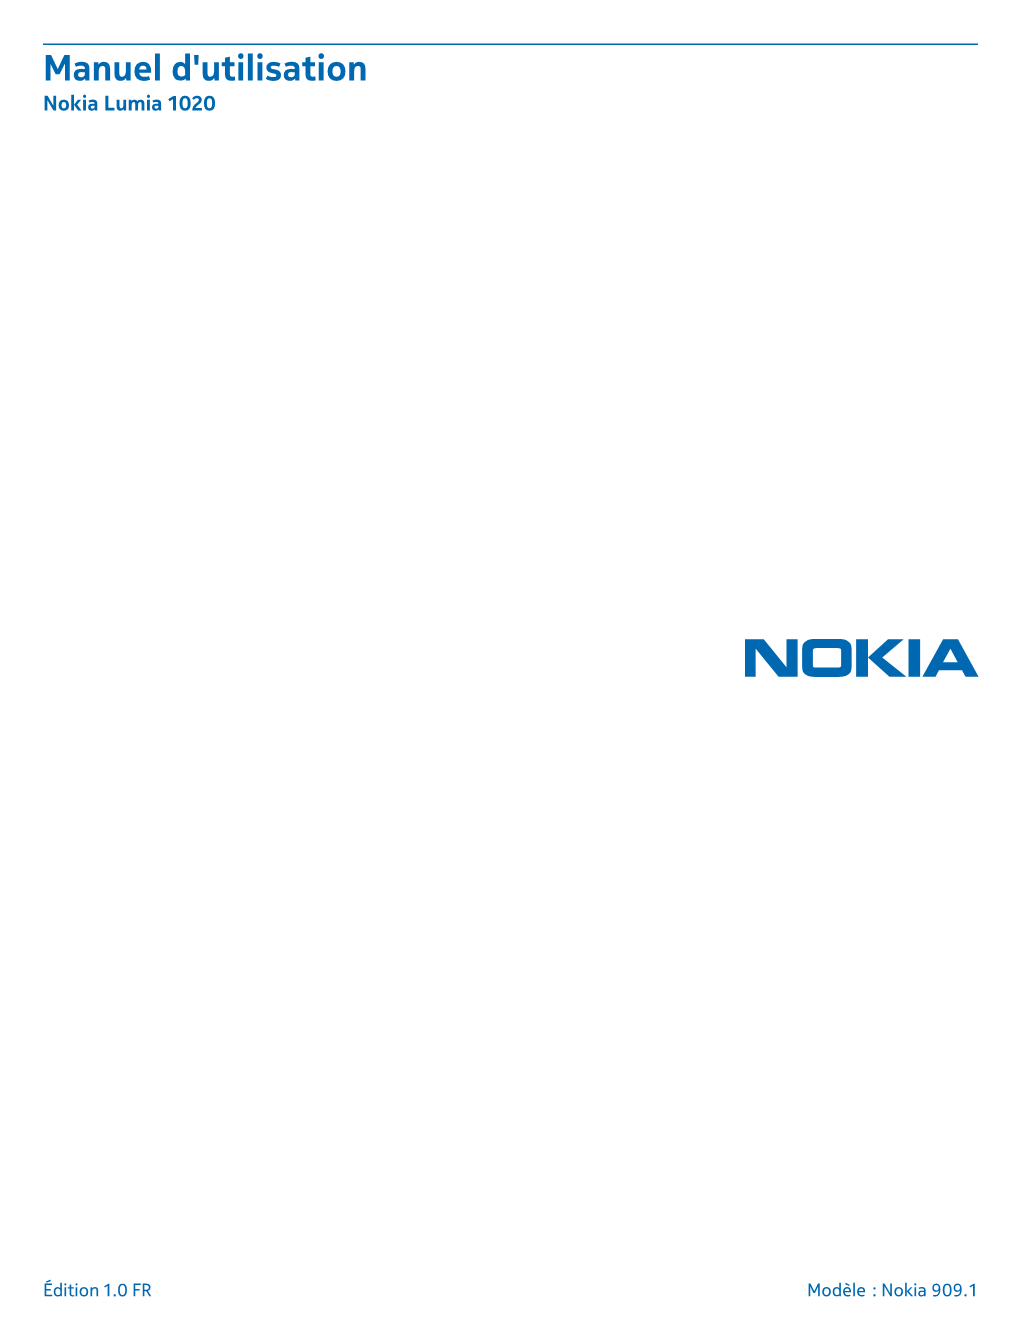 Manuel D'utilisation Nokia Lumia 1020